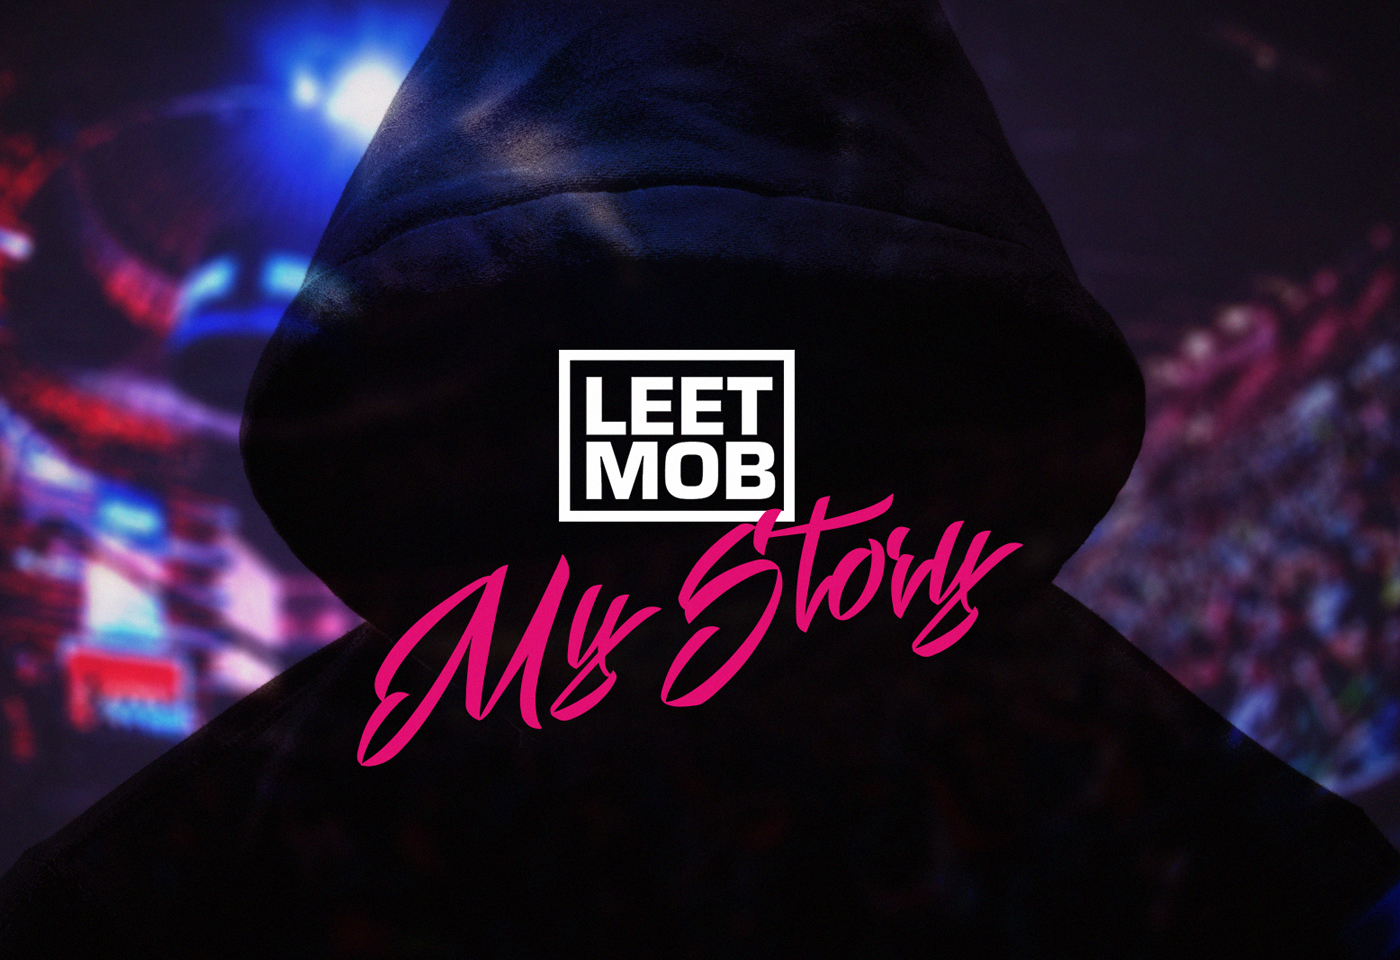 leet mob esl katowice esl iem katowice katowice 2016 My Story Music cover Song Cover Art cover design leet mob cover leet mob art